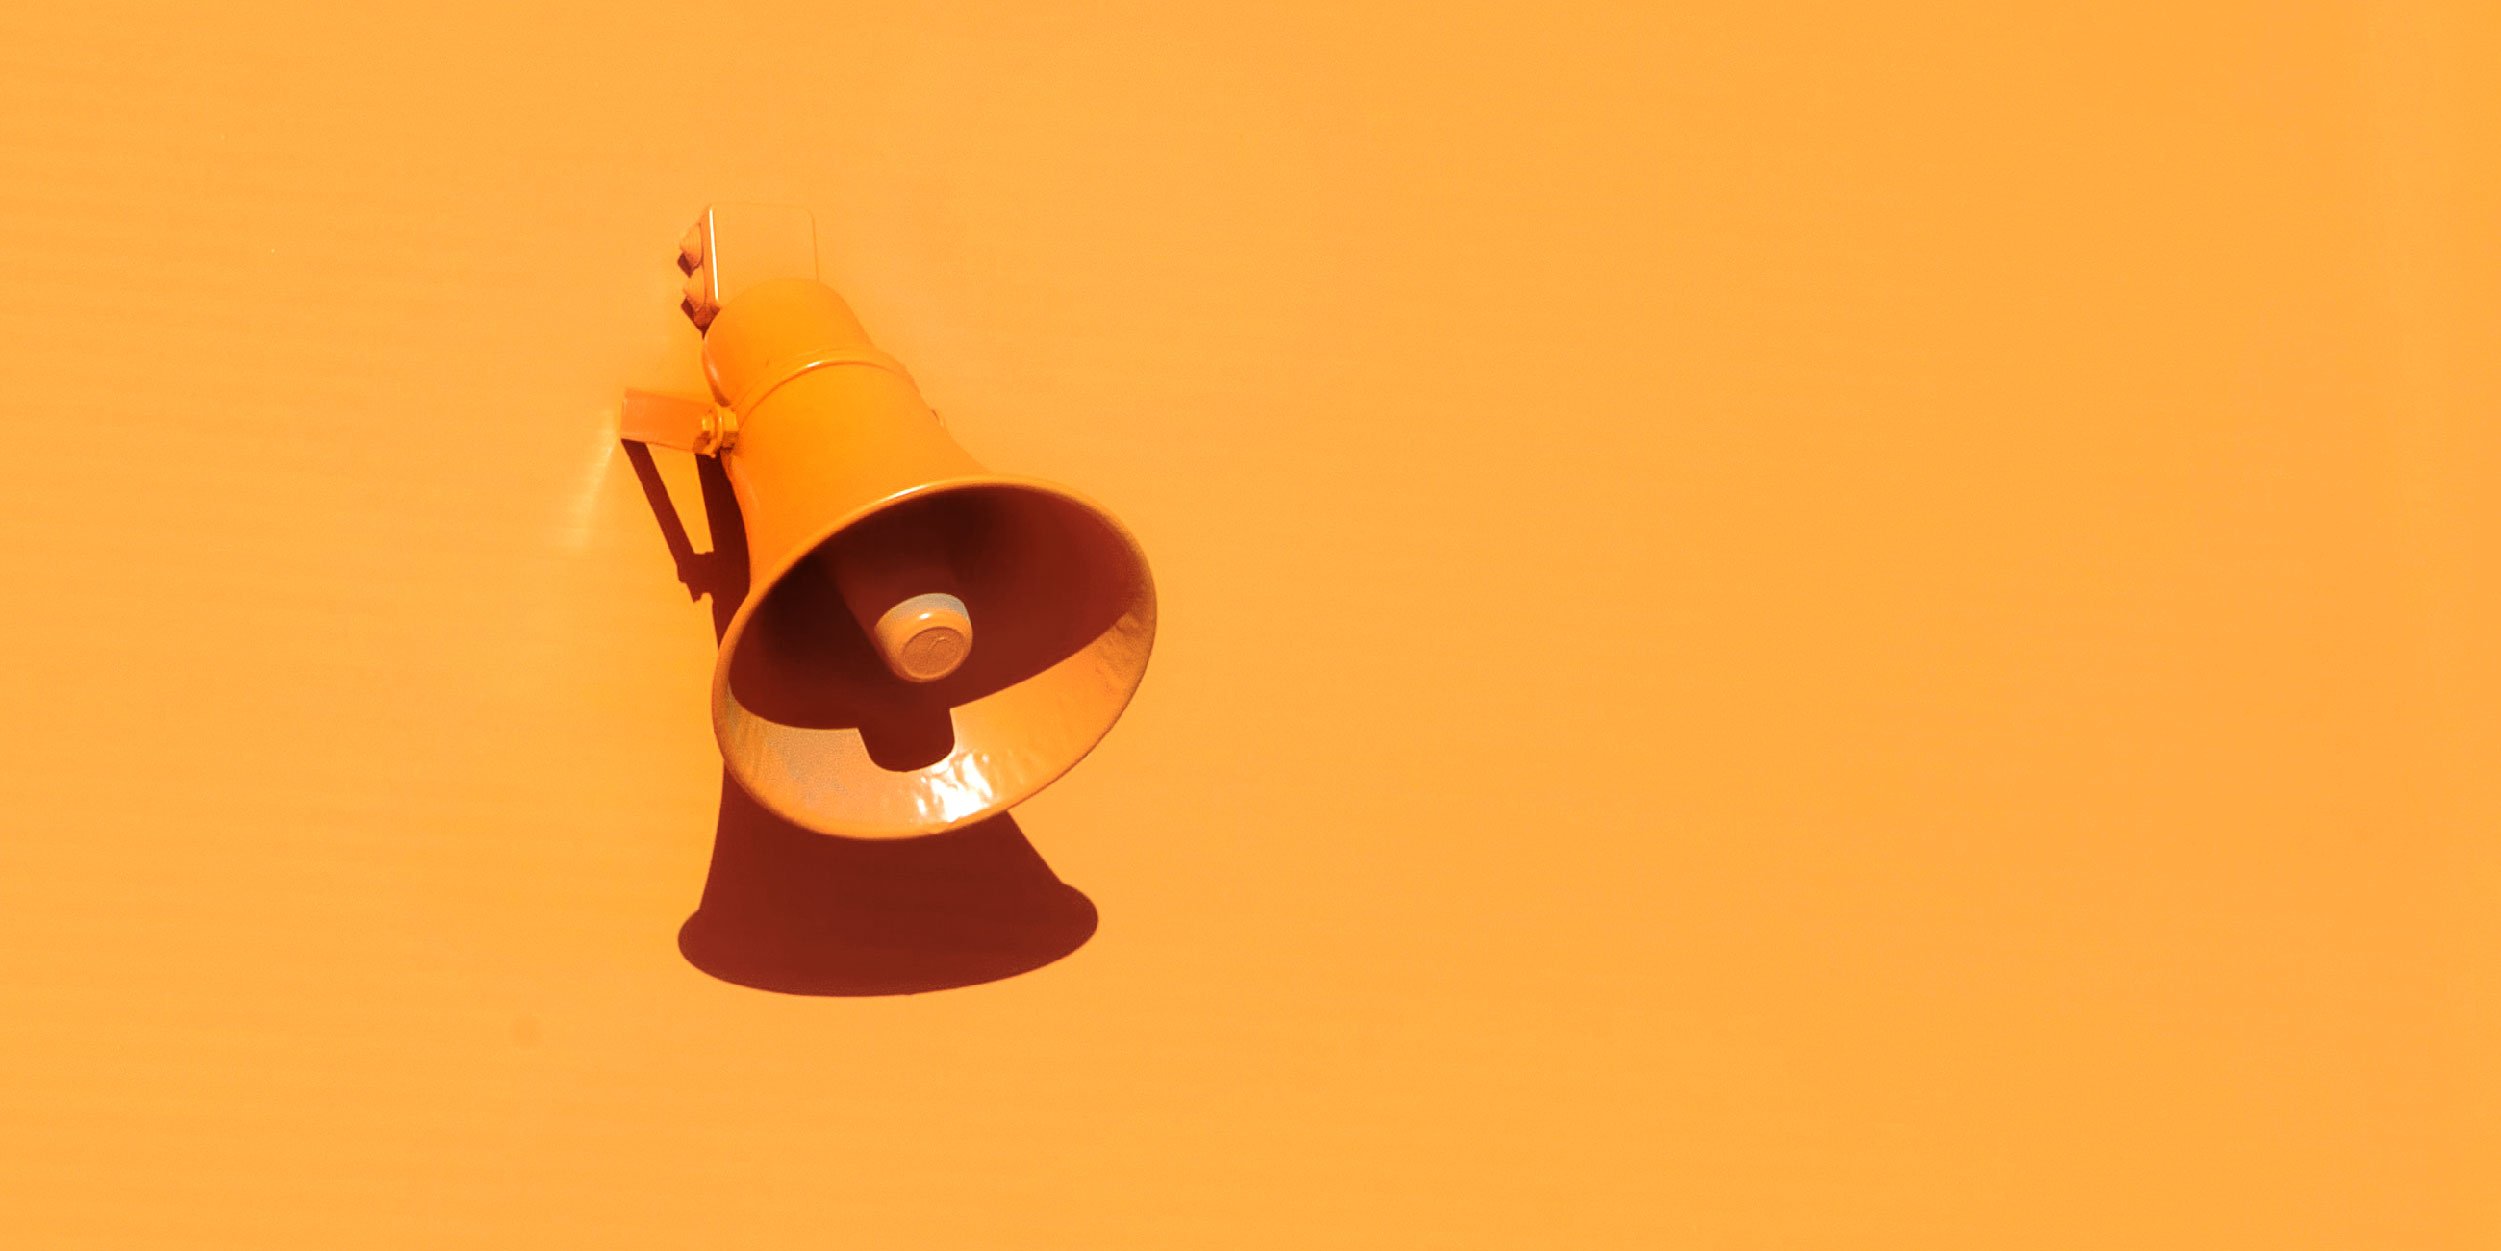 An orange megaphone